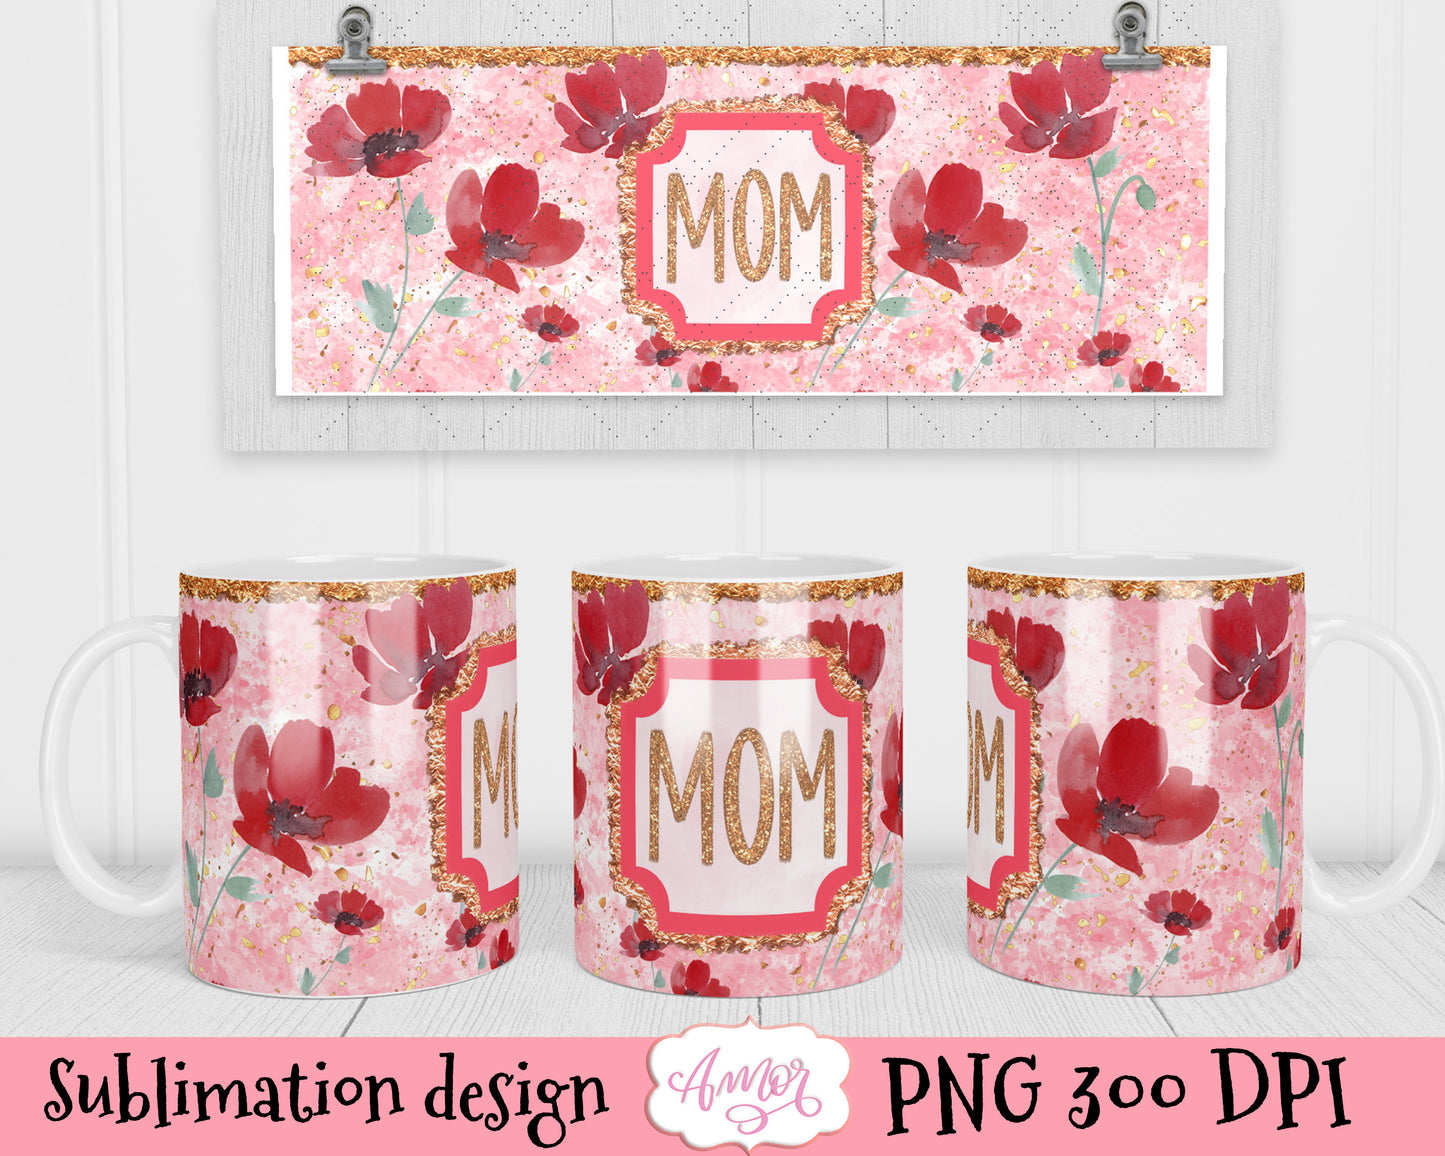 Mom Mug template for sublimation